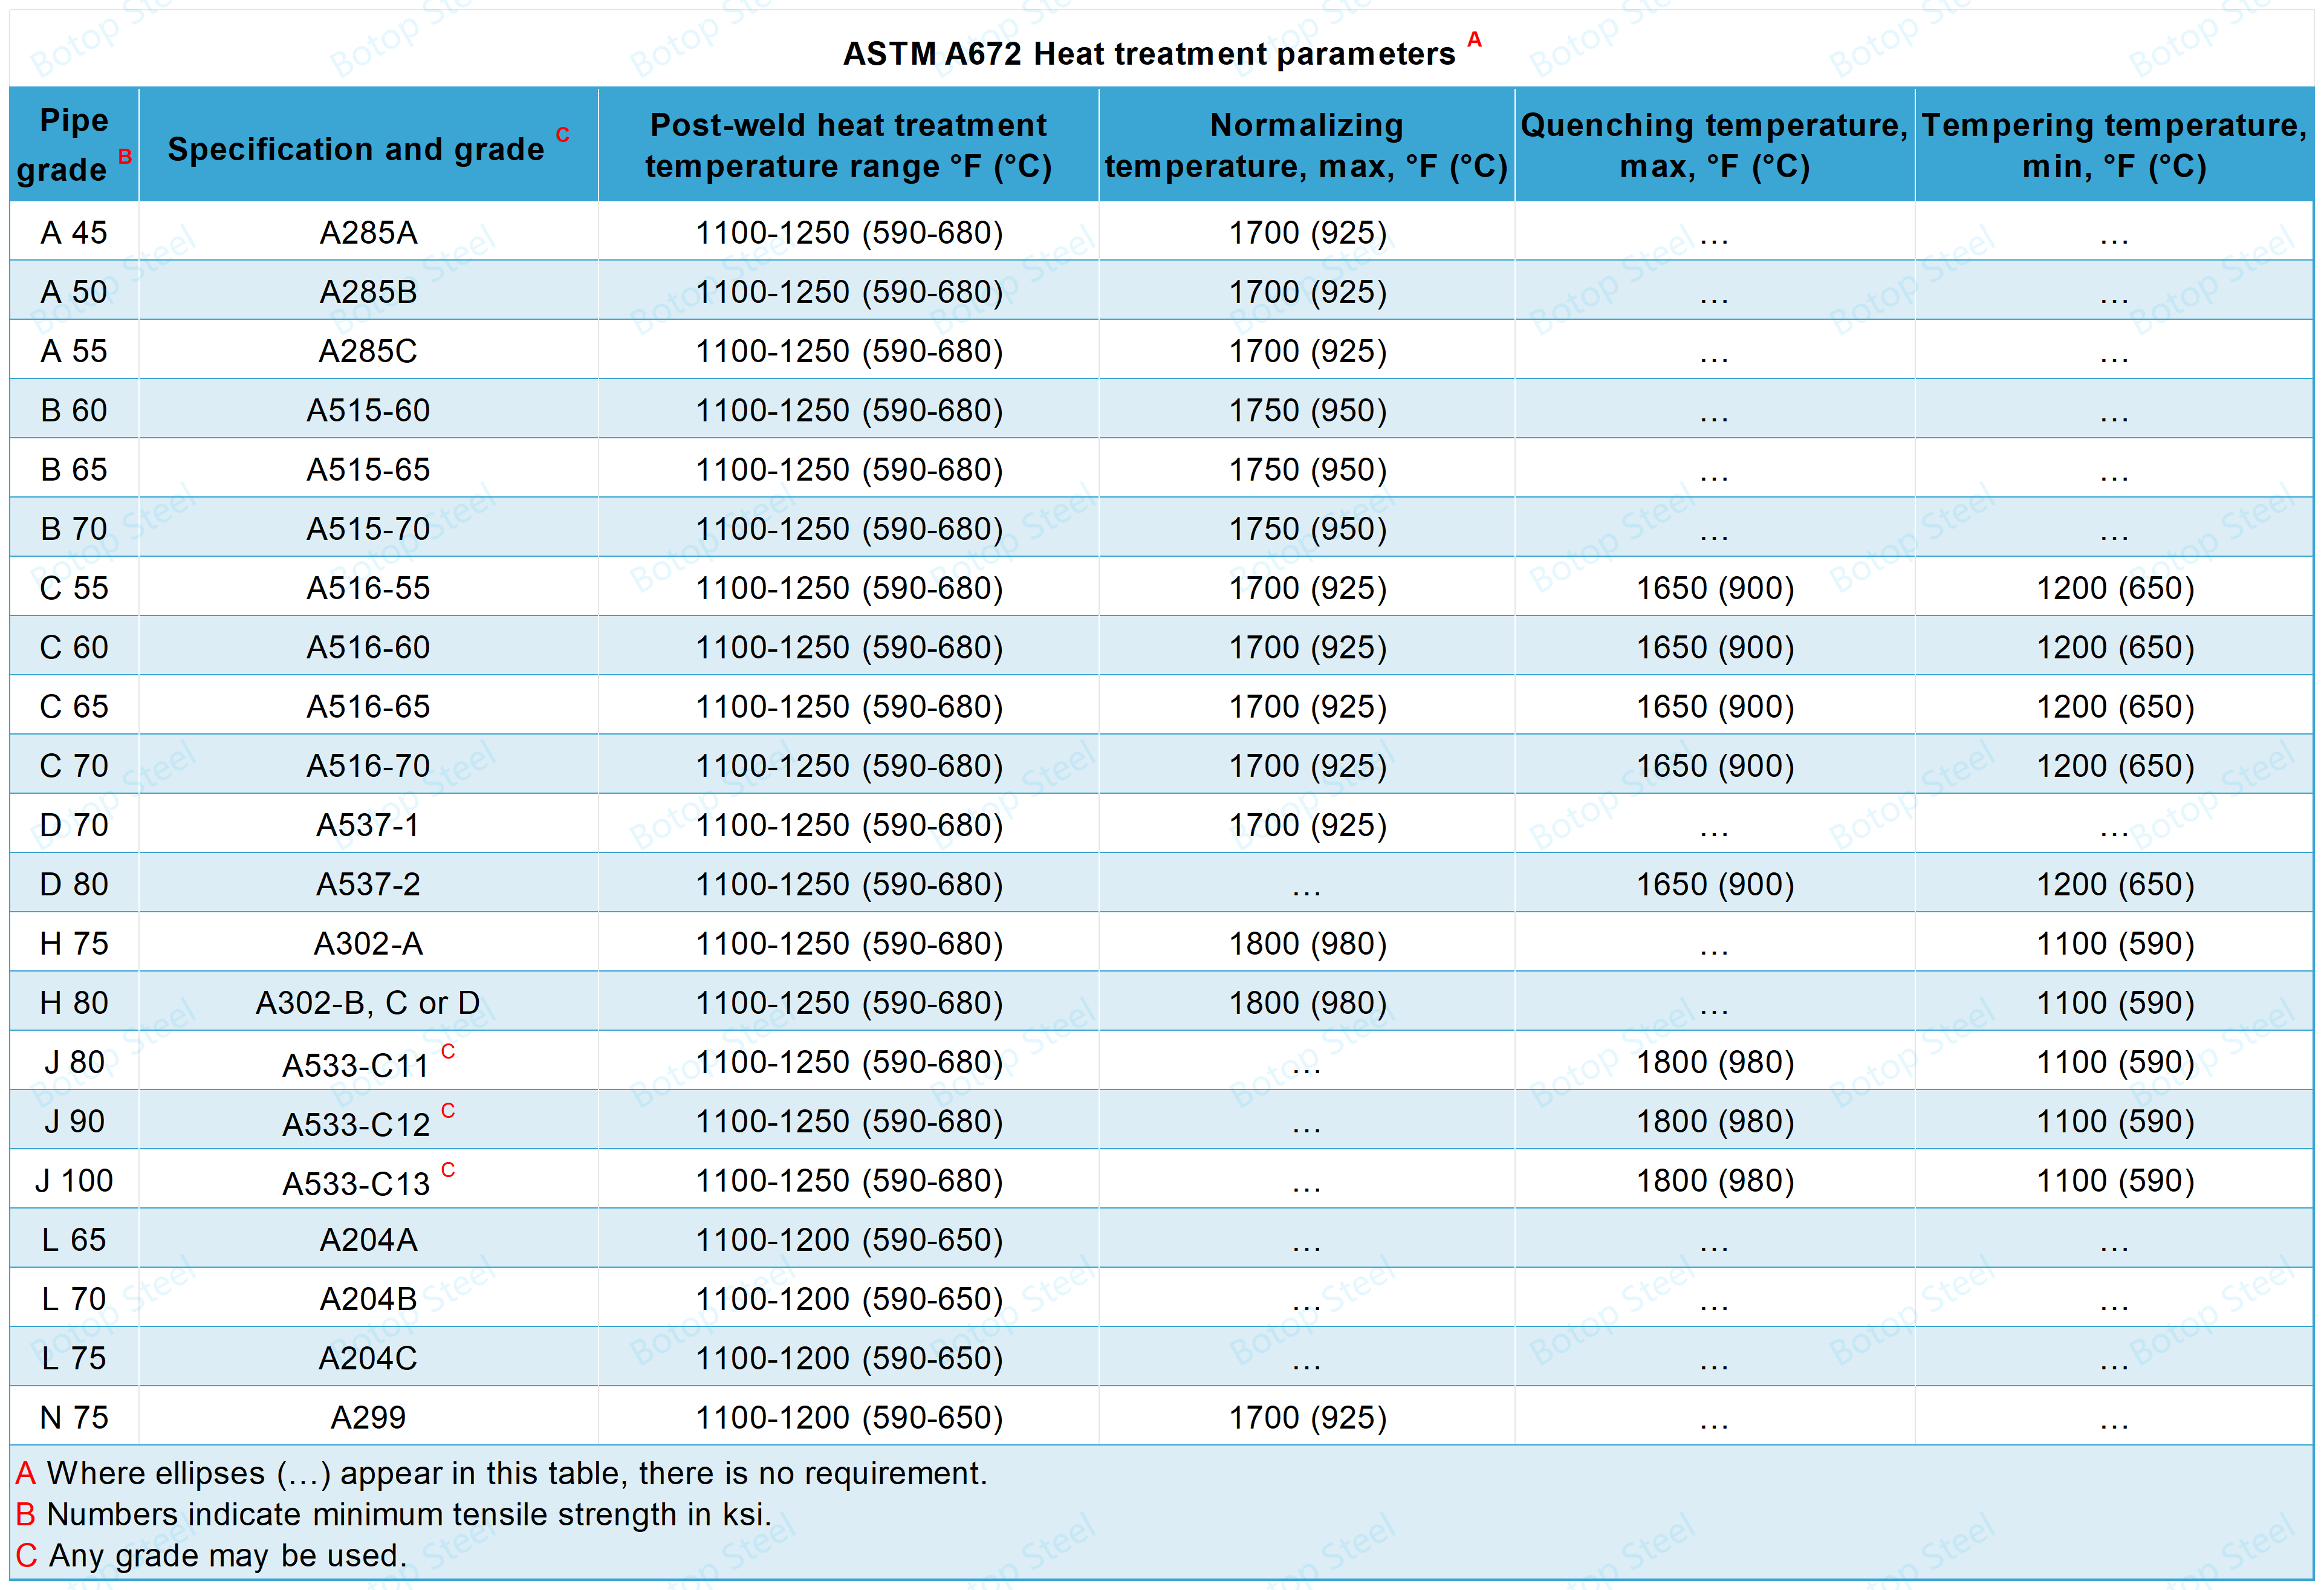 ASTM A672 Parametrii de tratament termic